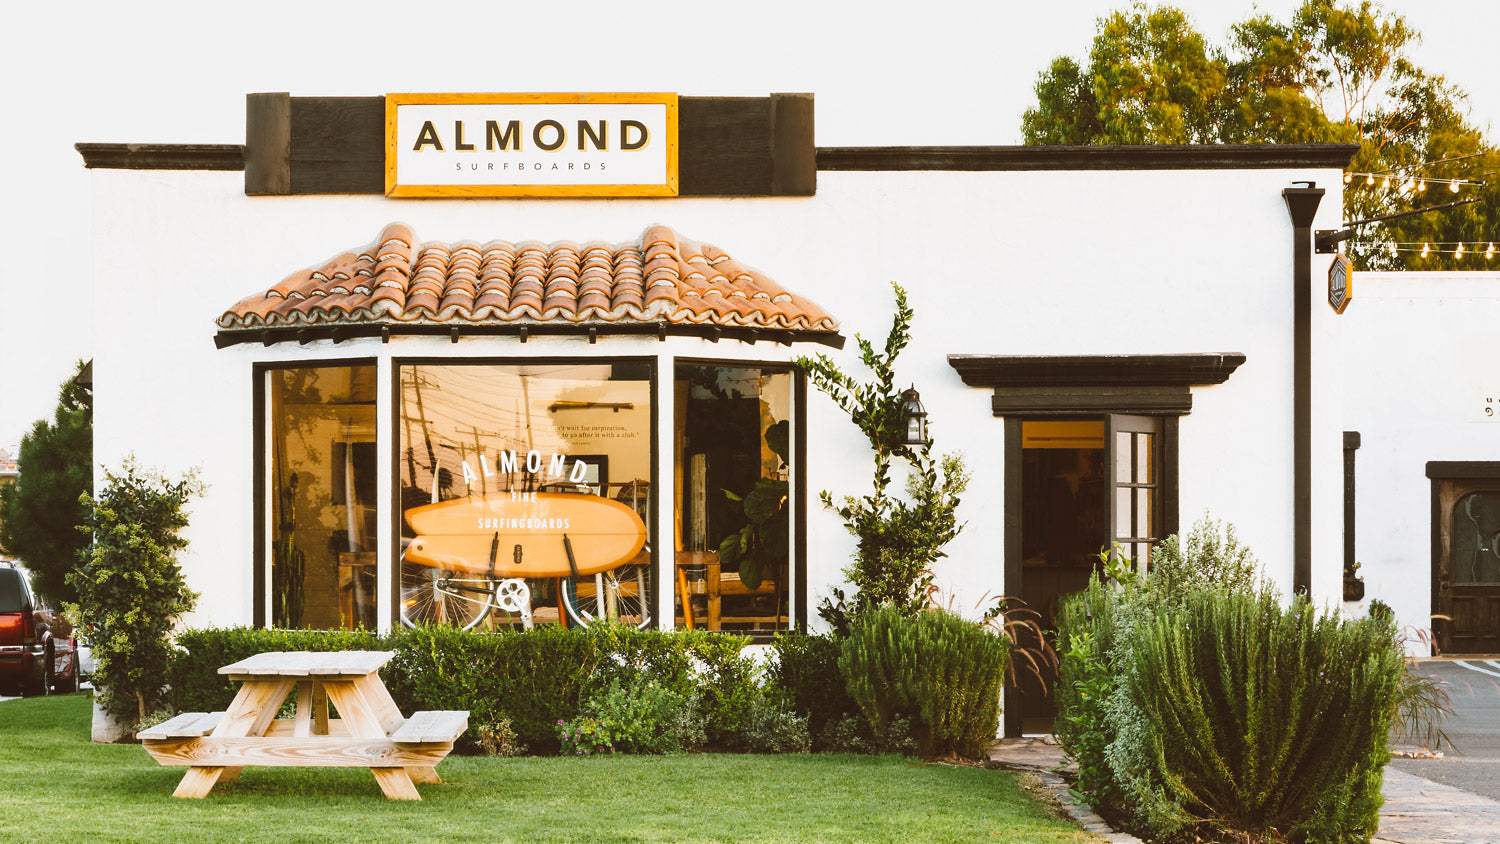 Almond Surf Shop Turns 9!